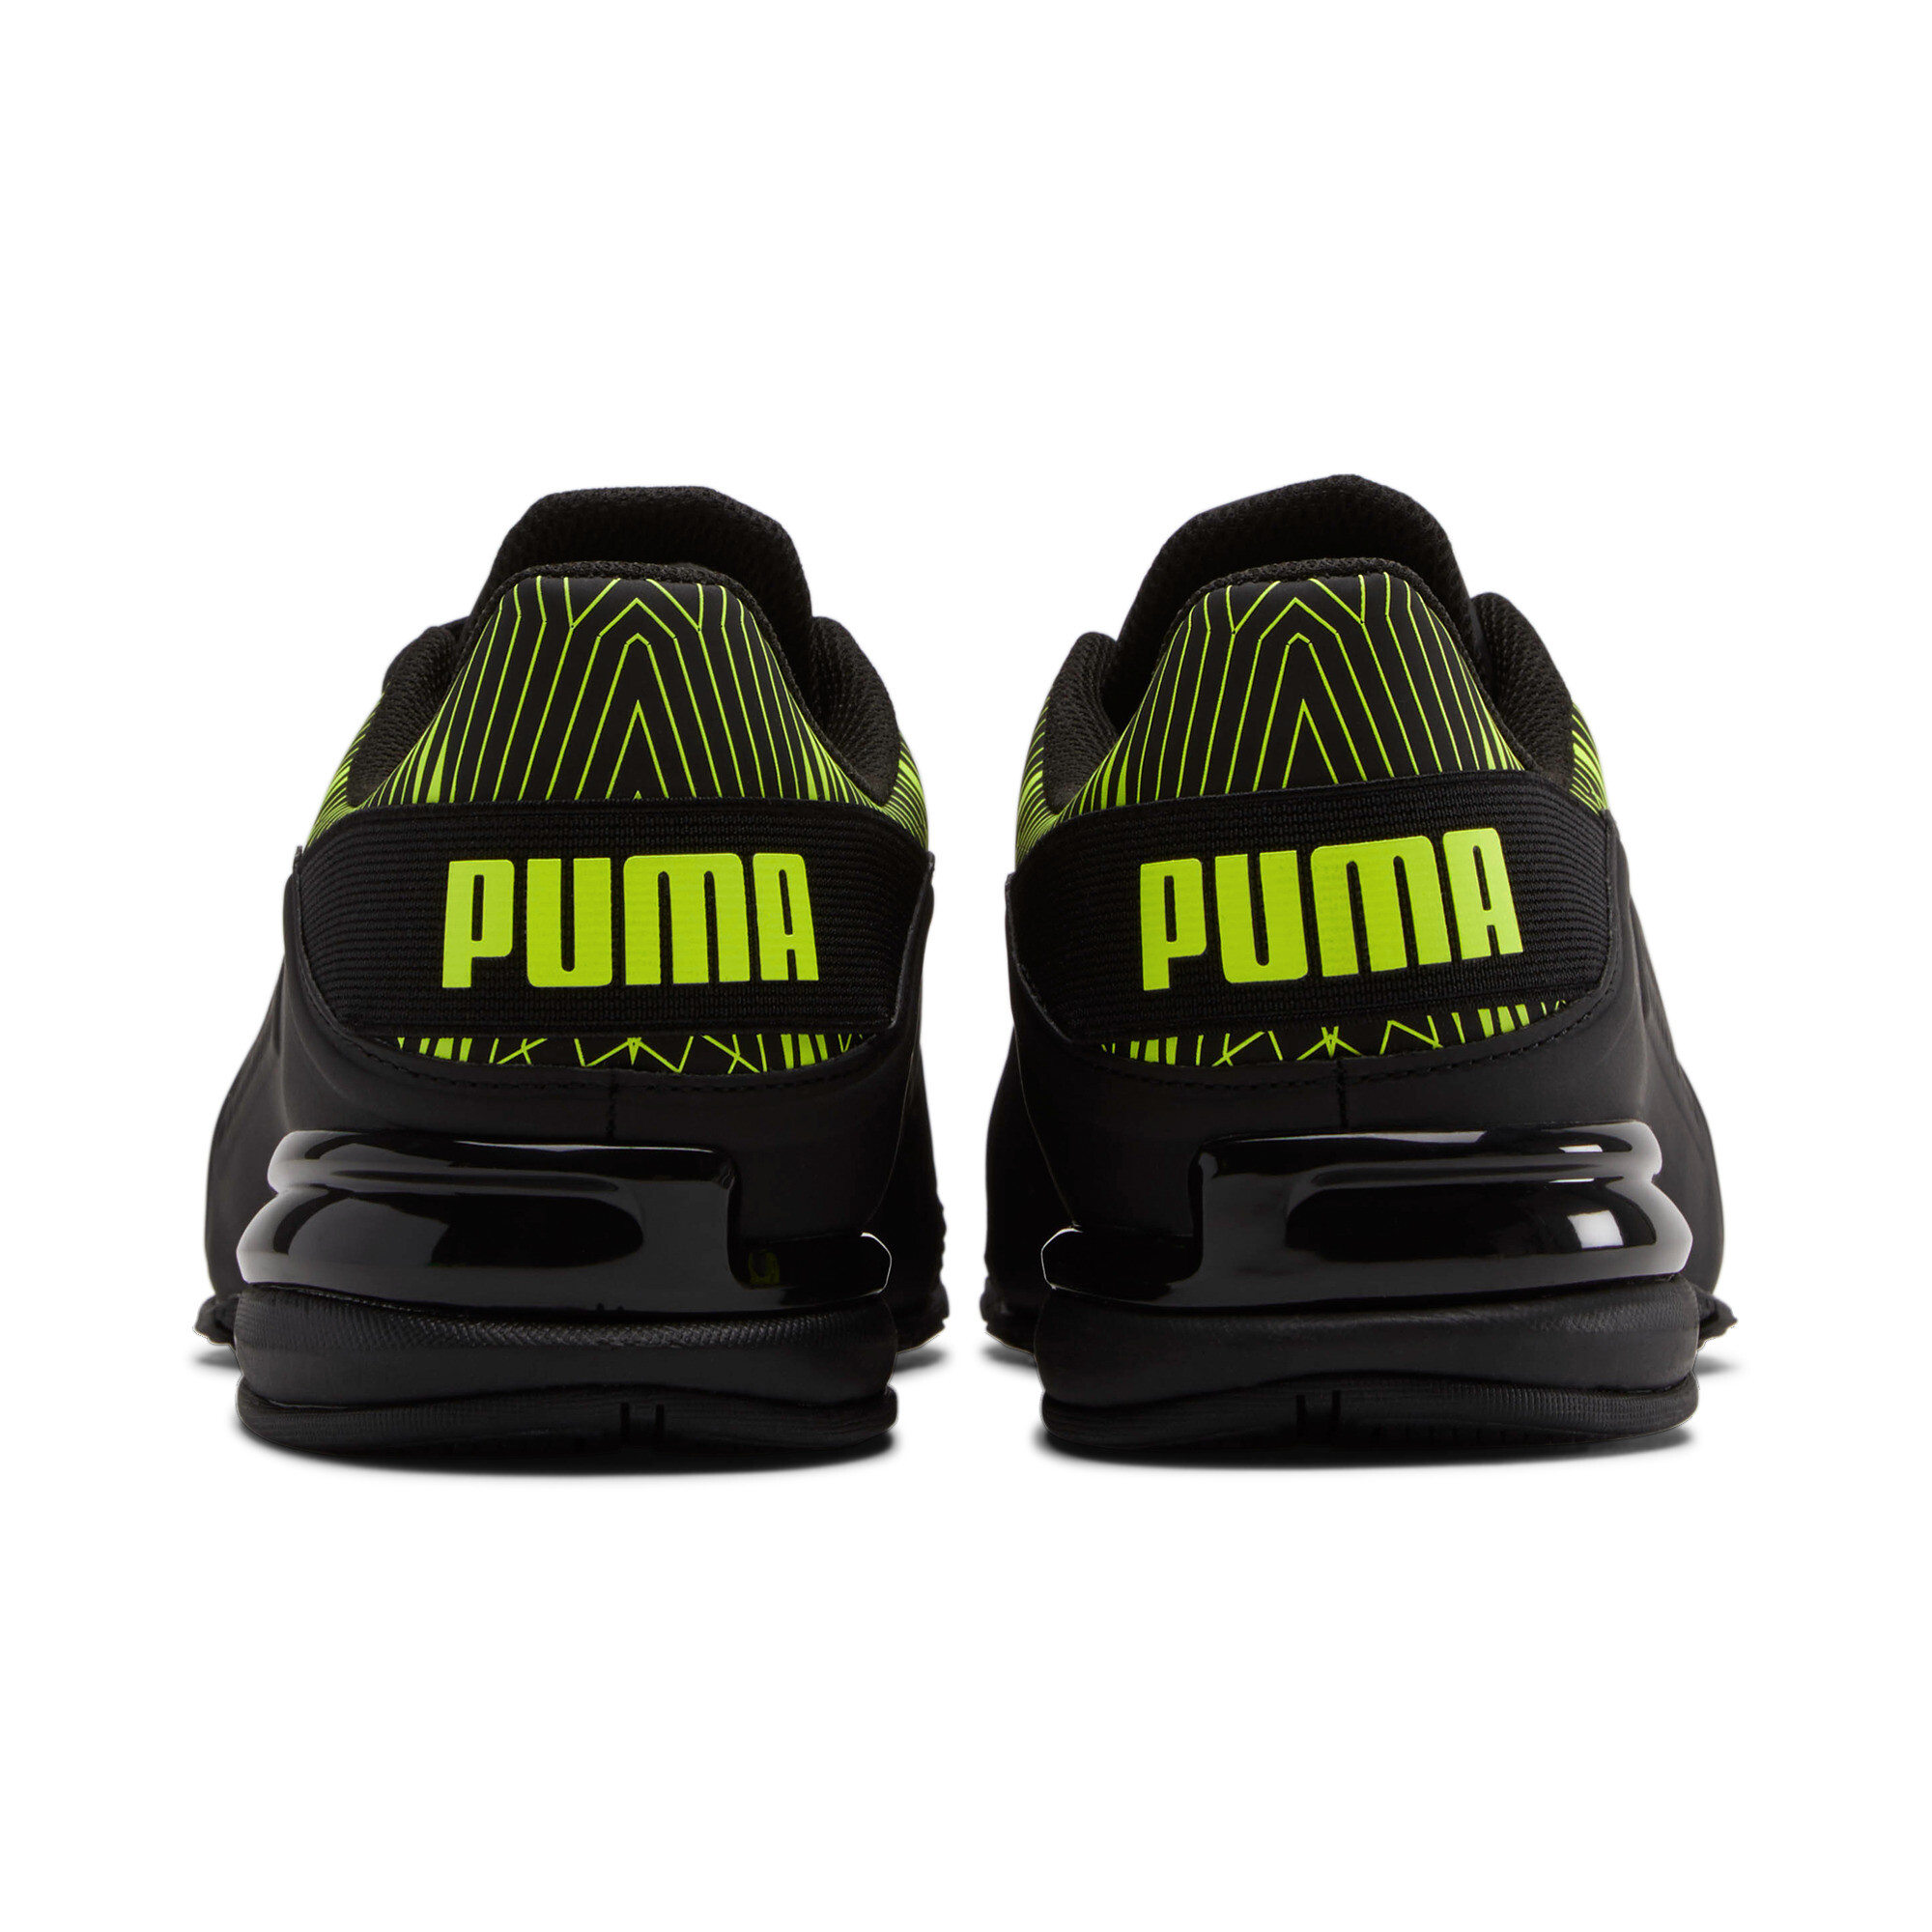 PUMA Men's Viz Runner Graphic Sneakers | eBay